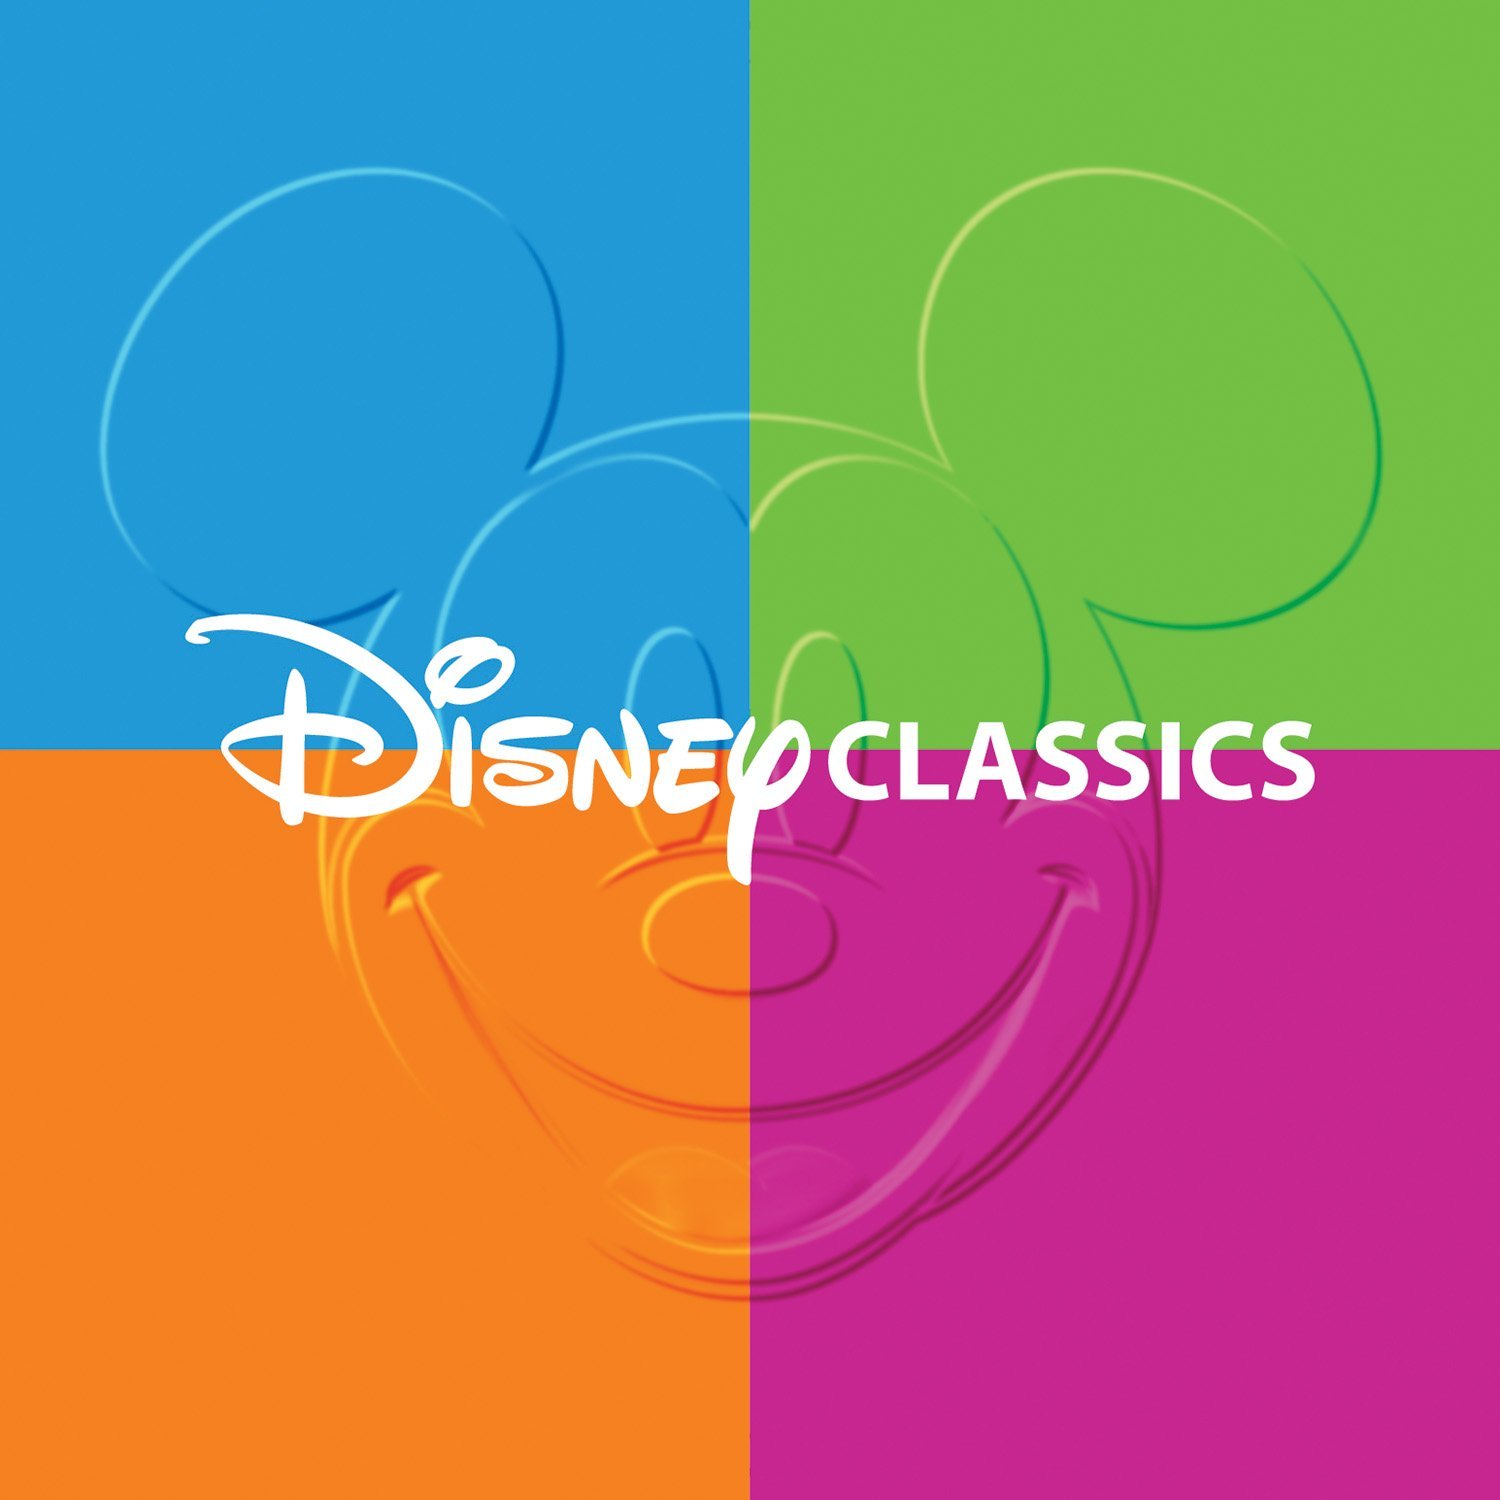  Disney: 60 Years of Musical Magic album, or the Walt Disney Classics